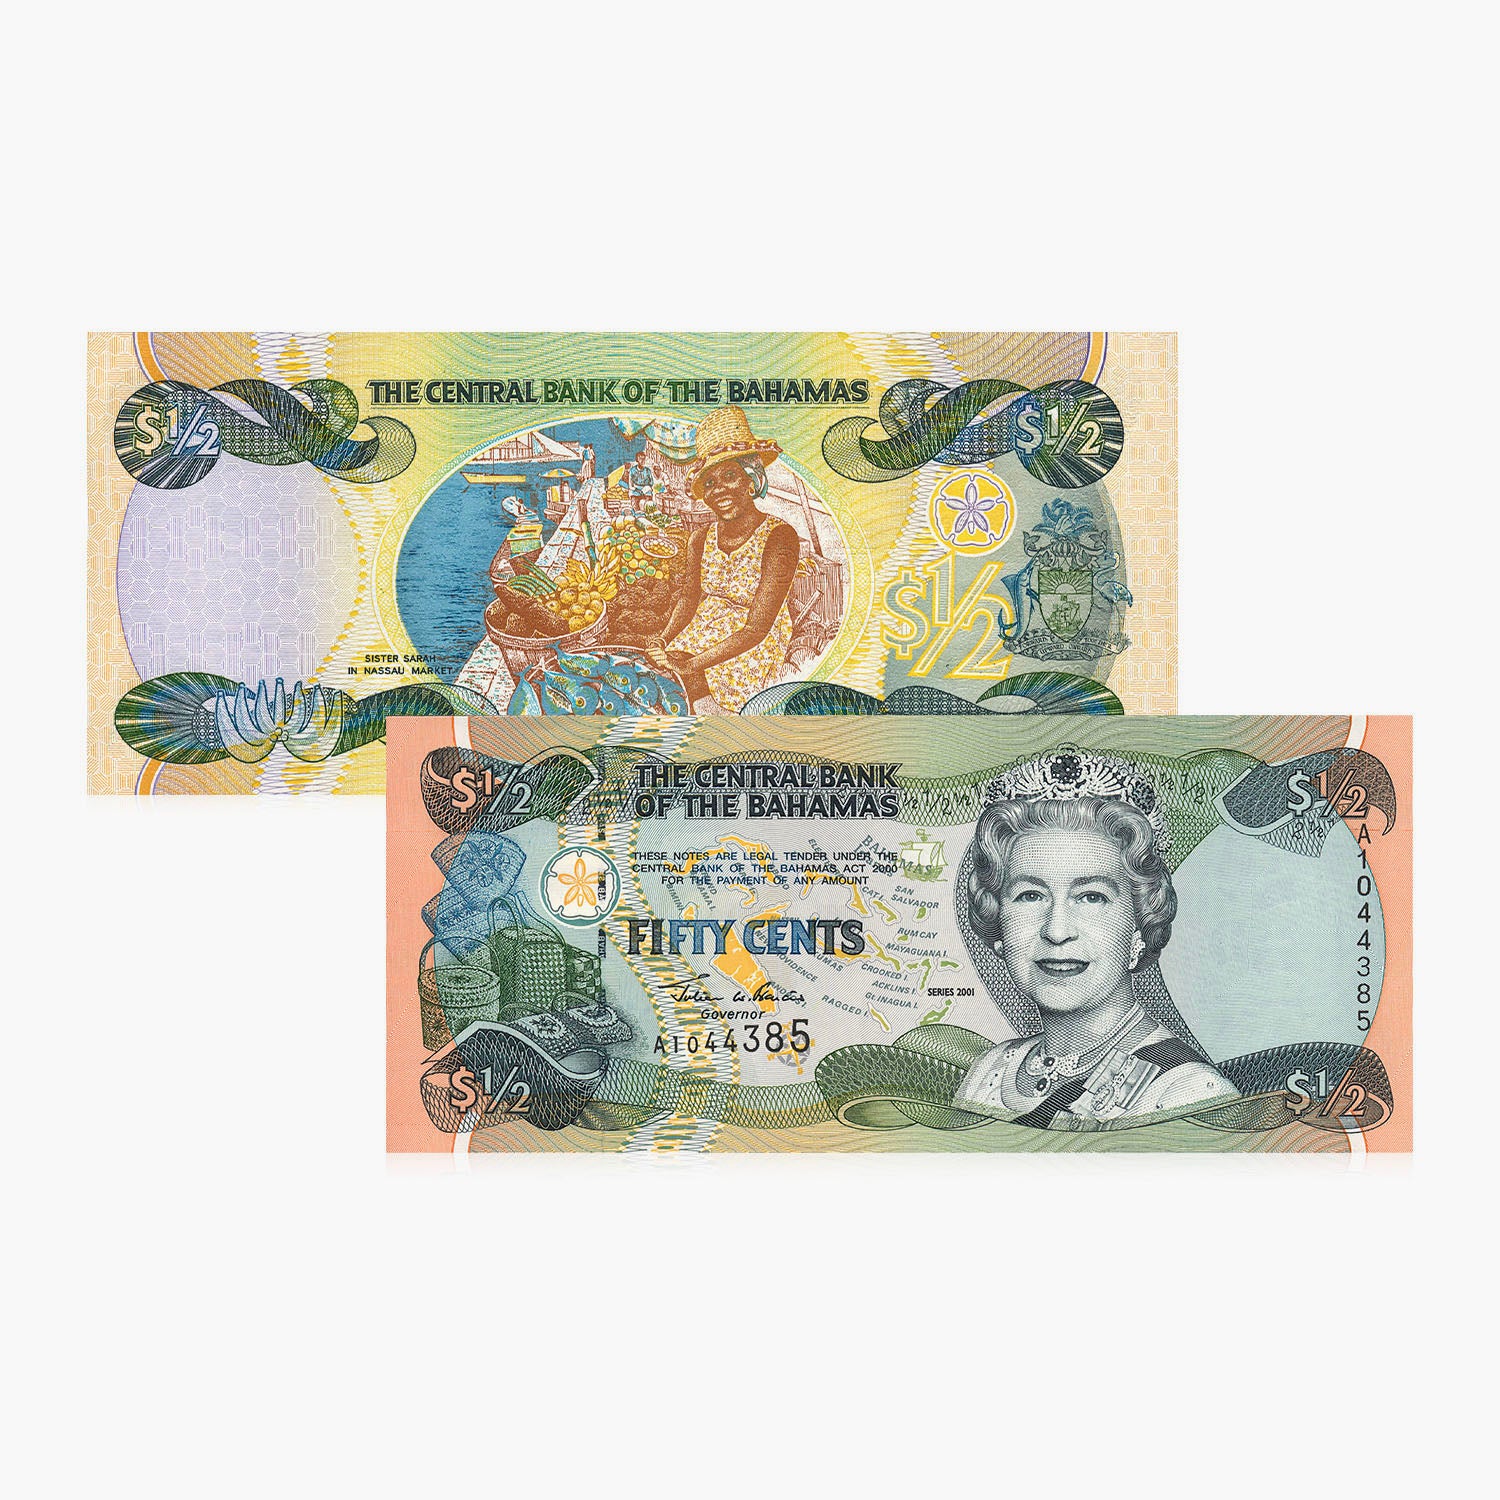 Her Majesty Queen Elizabeth II Royal Half Dollar Banknote